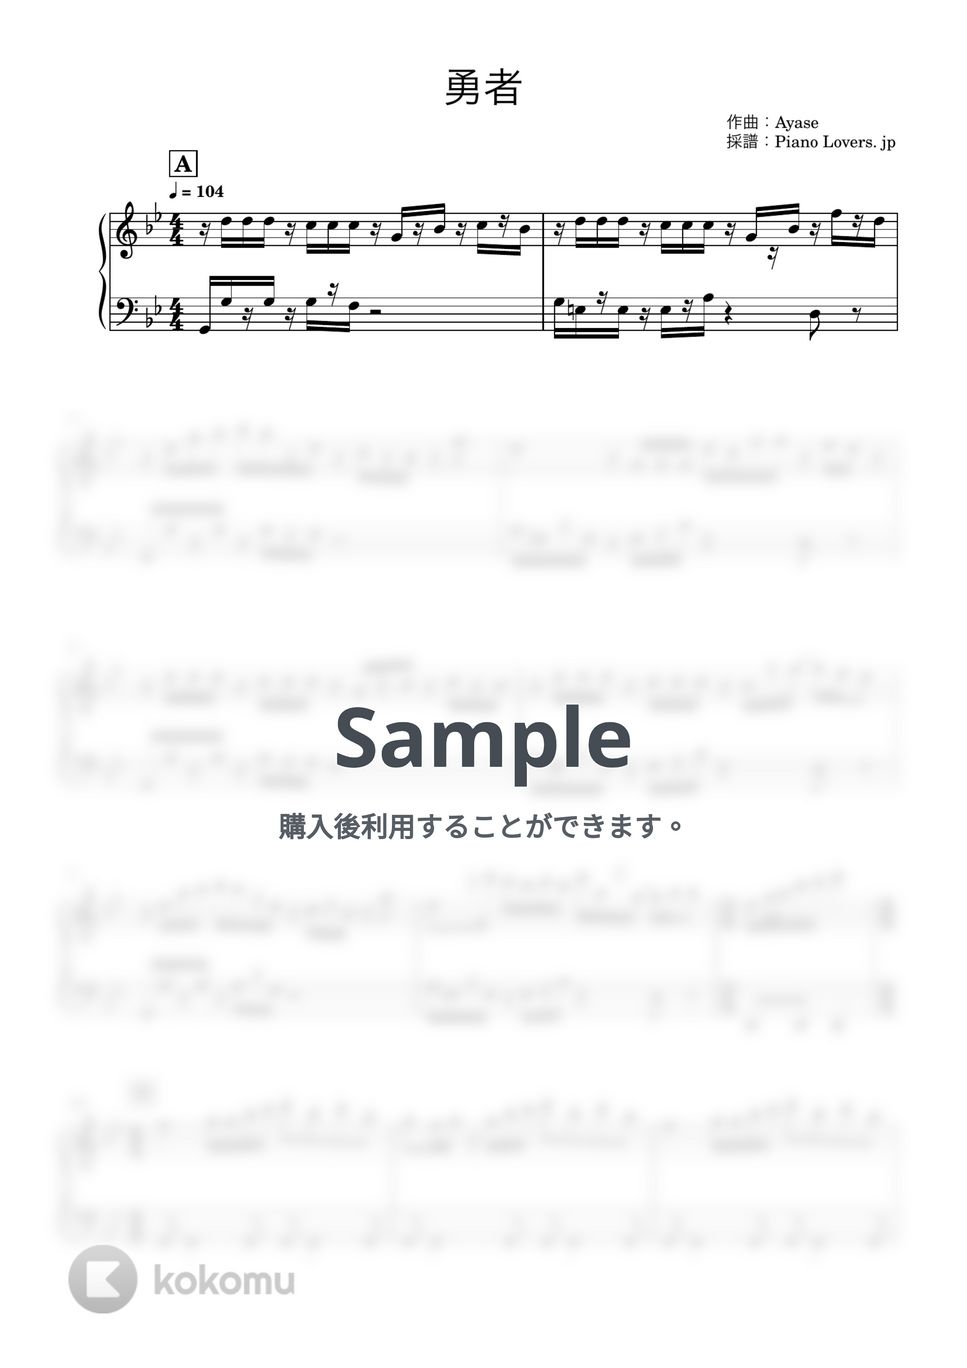 YOASOBI - 勇者 (葬送のフリーレン) by Piano Lovers. jp